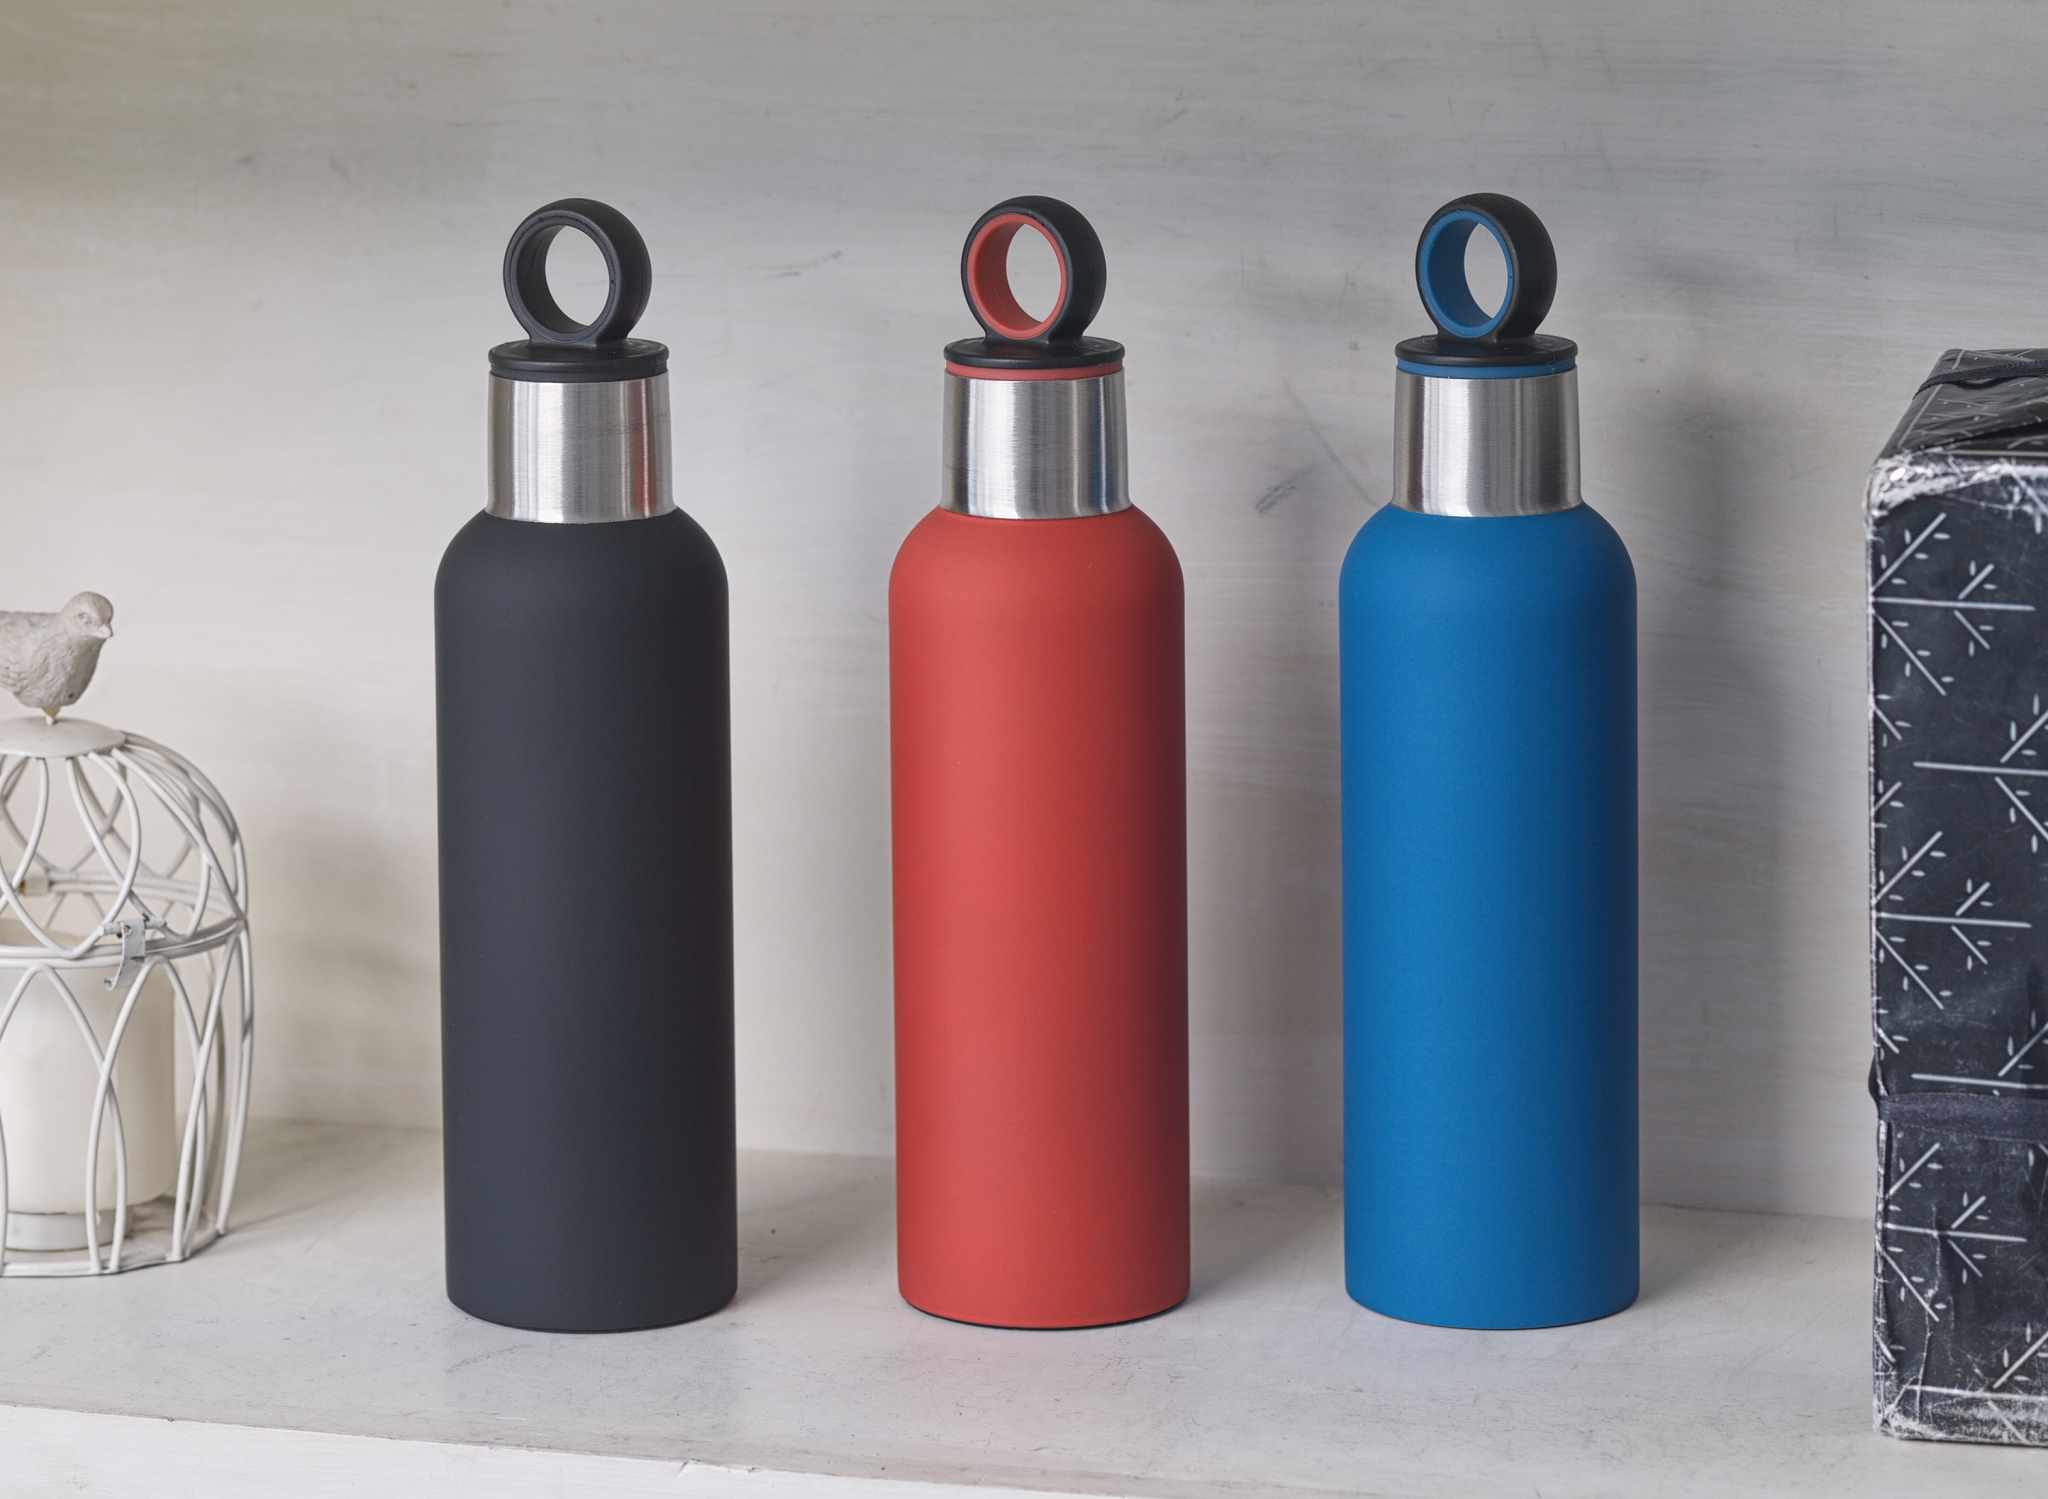 Термобутылка "Силуэт" 500 мл, покрытие soft touch, красный, нержавеющая сталь/soft touch/пластик